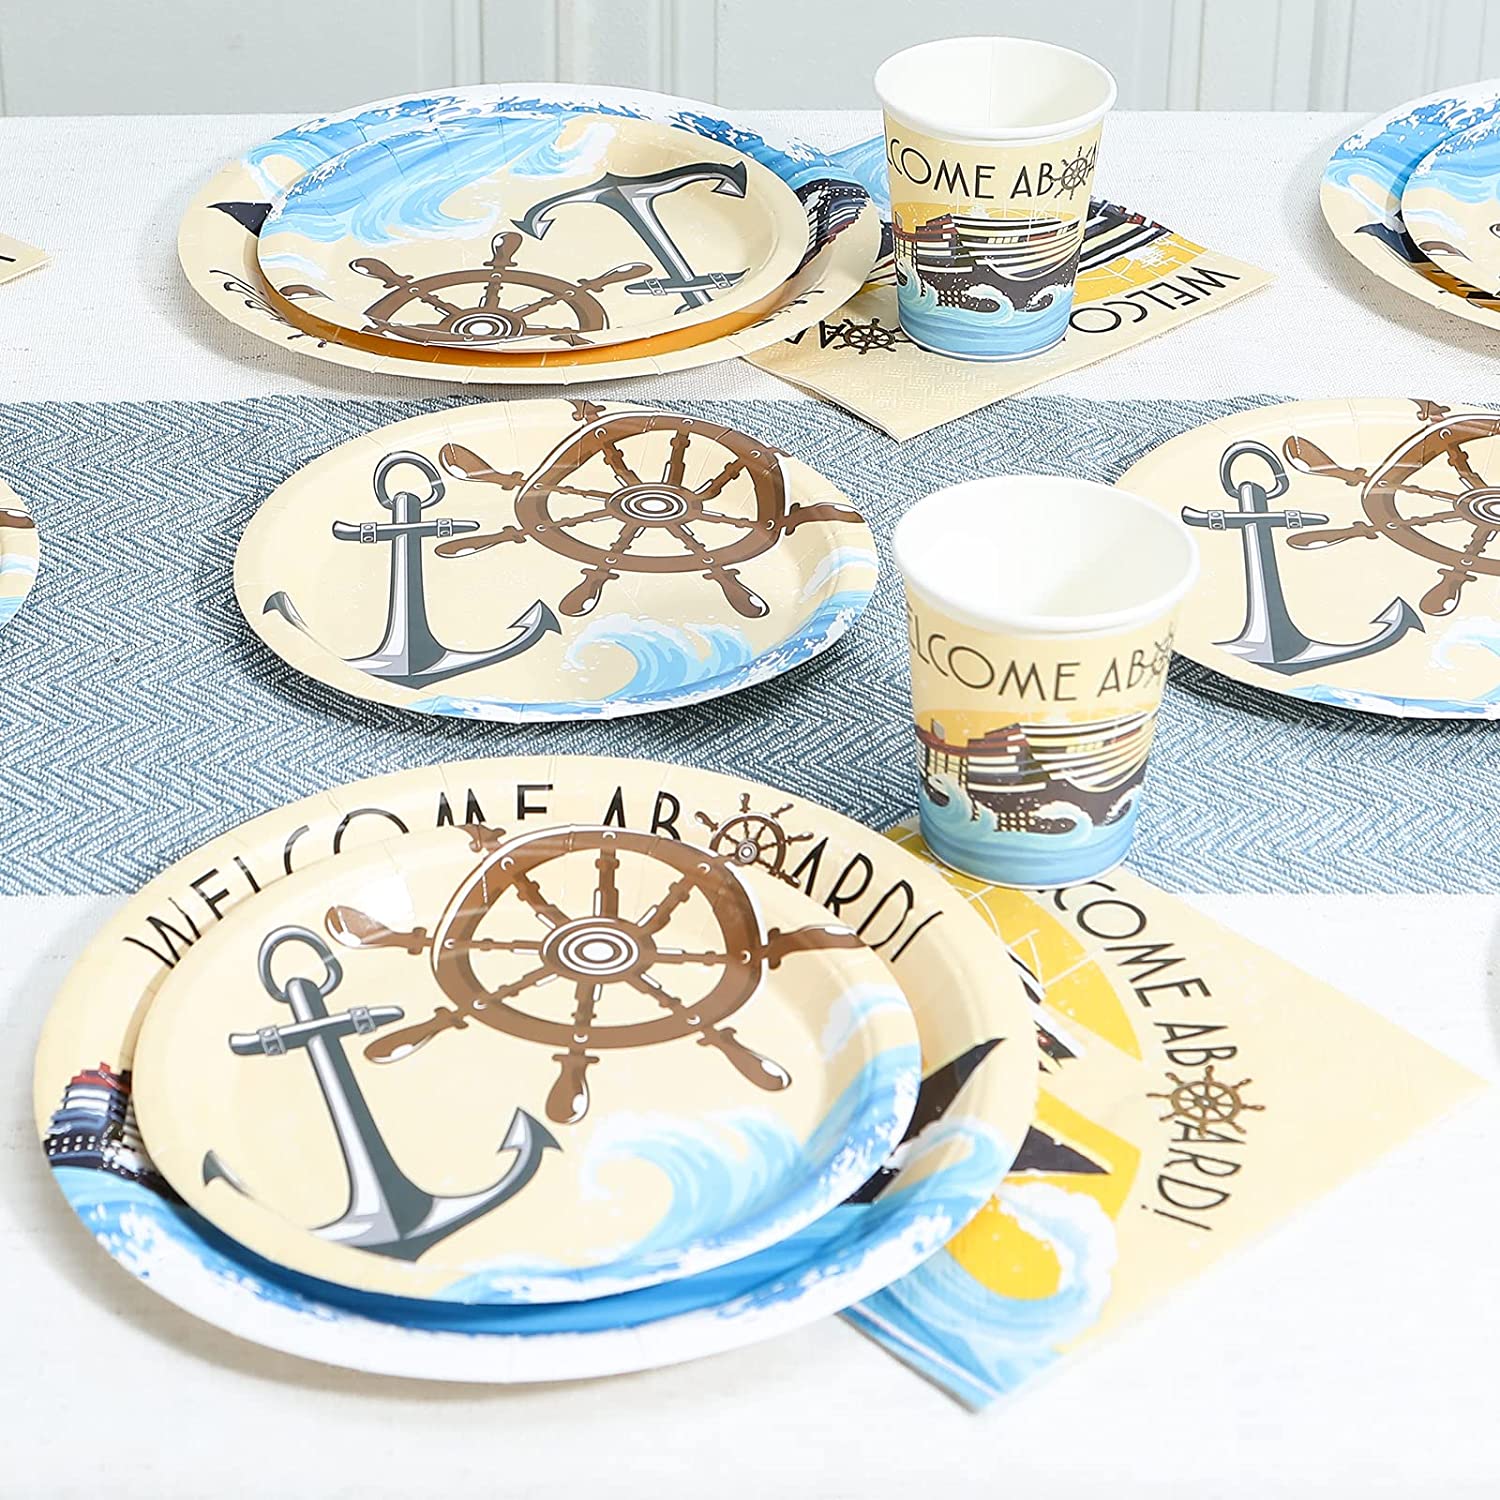 Titanic Birthday Plates, Cups and Napkins (Serves 24)